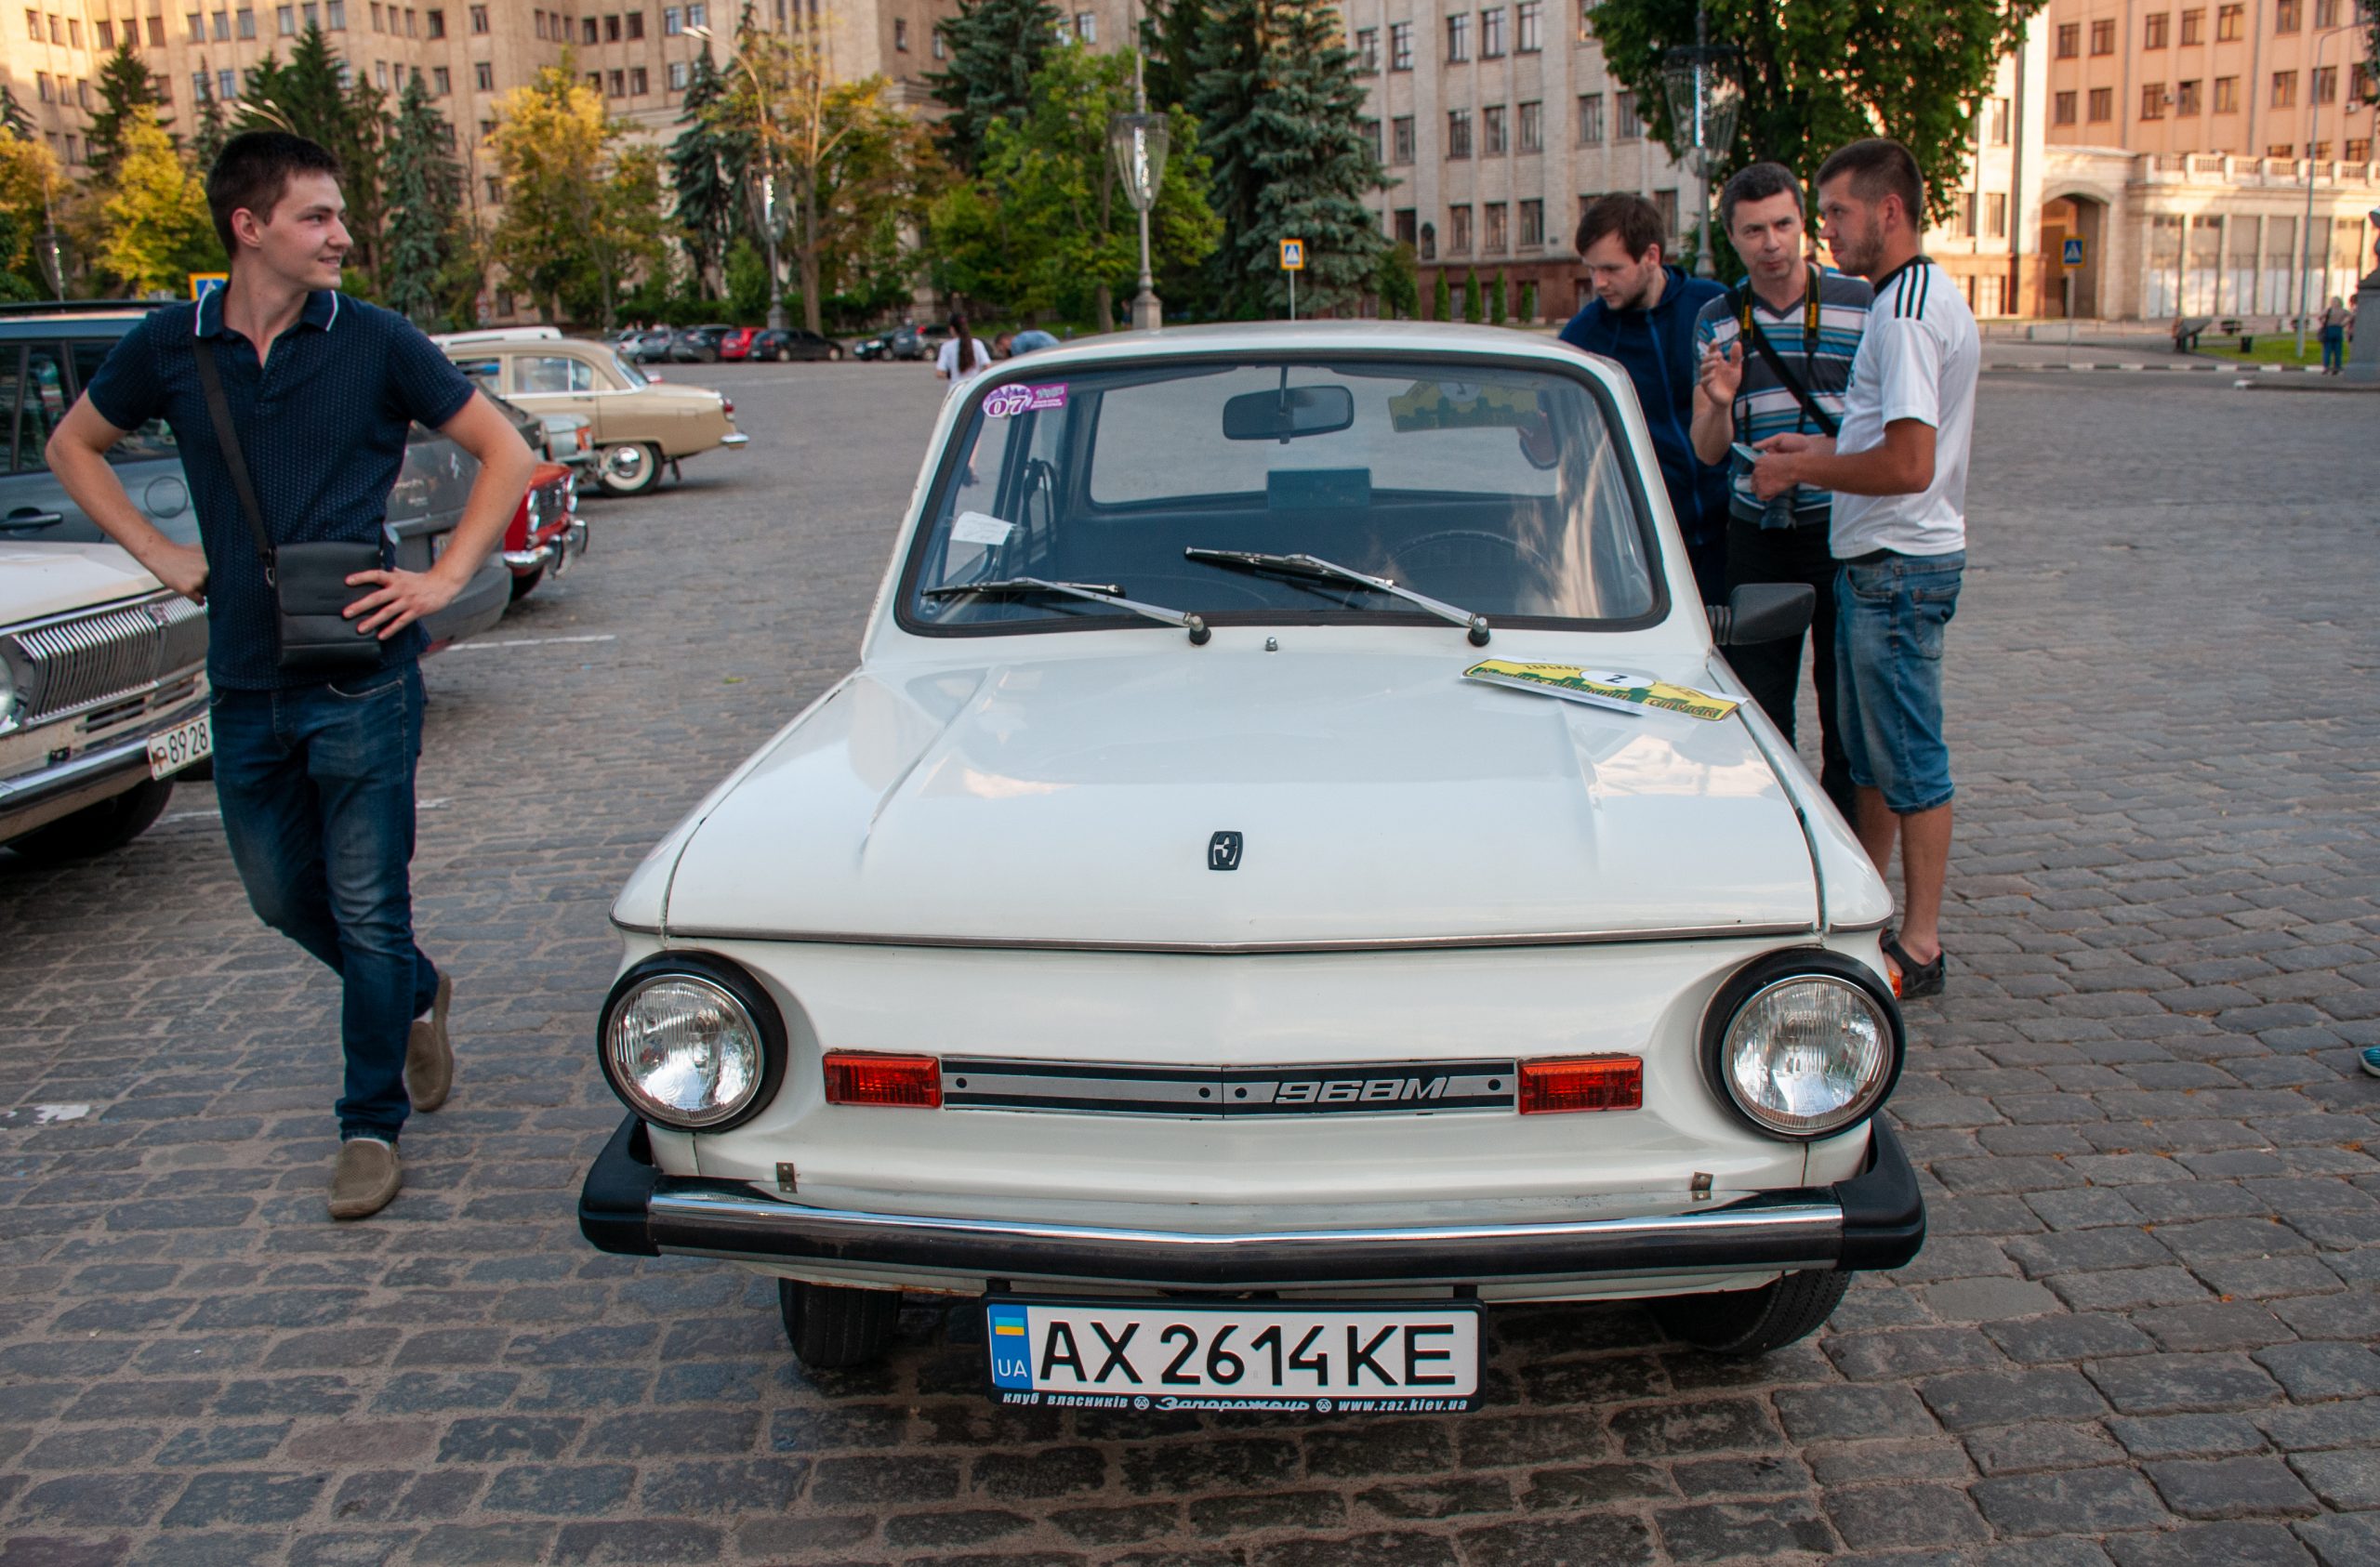 Ретро-автопробег ко Дню независимости: советский «Запорожец» отправится на международное «Ралли Монте-Карло»